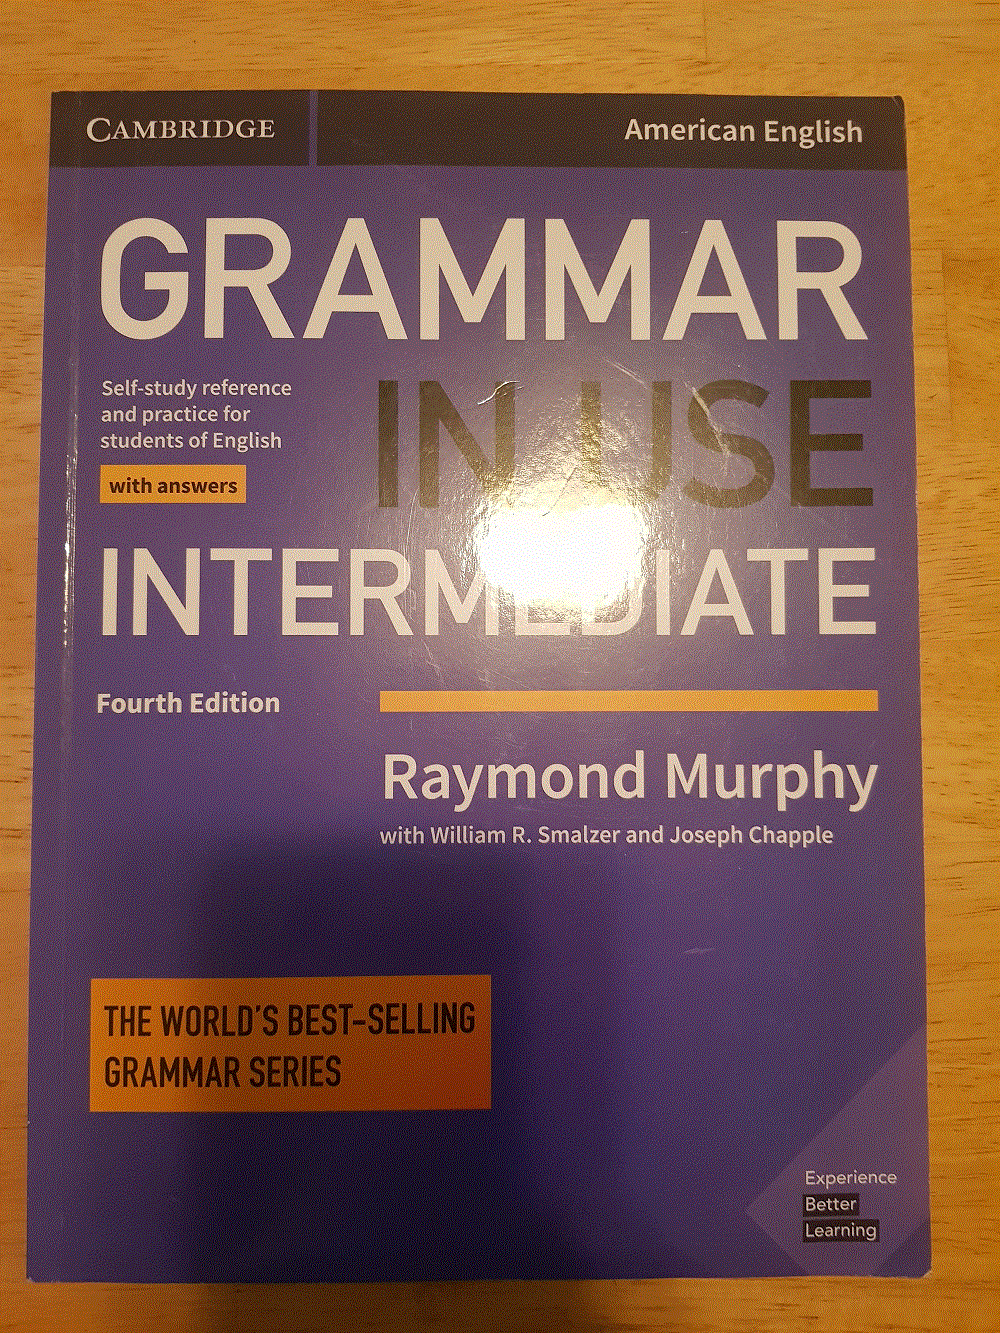 Grammar in use intermediate.gif